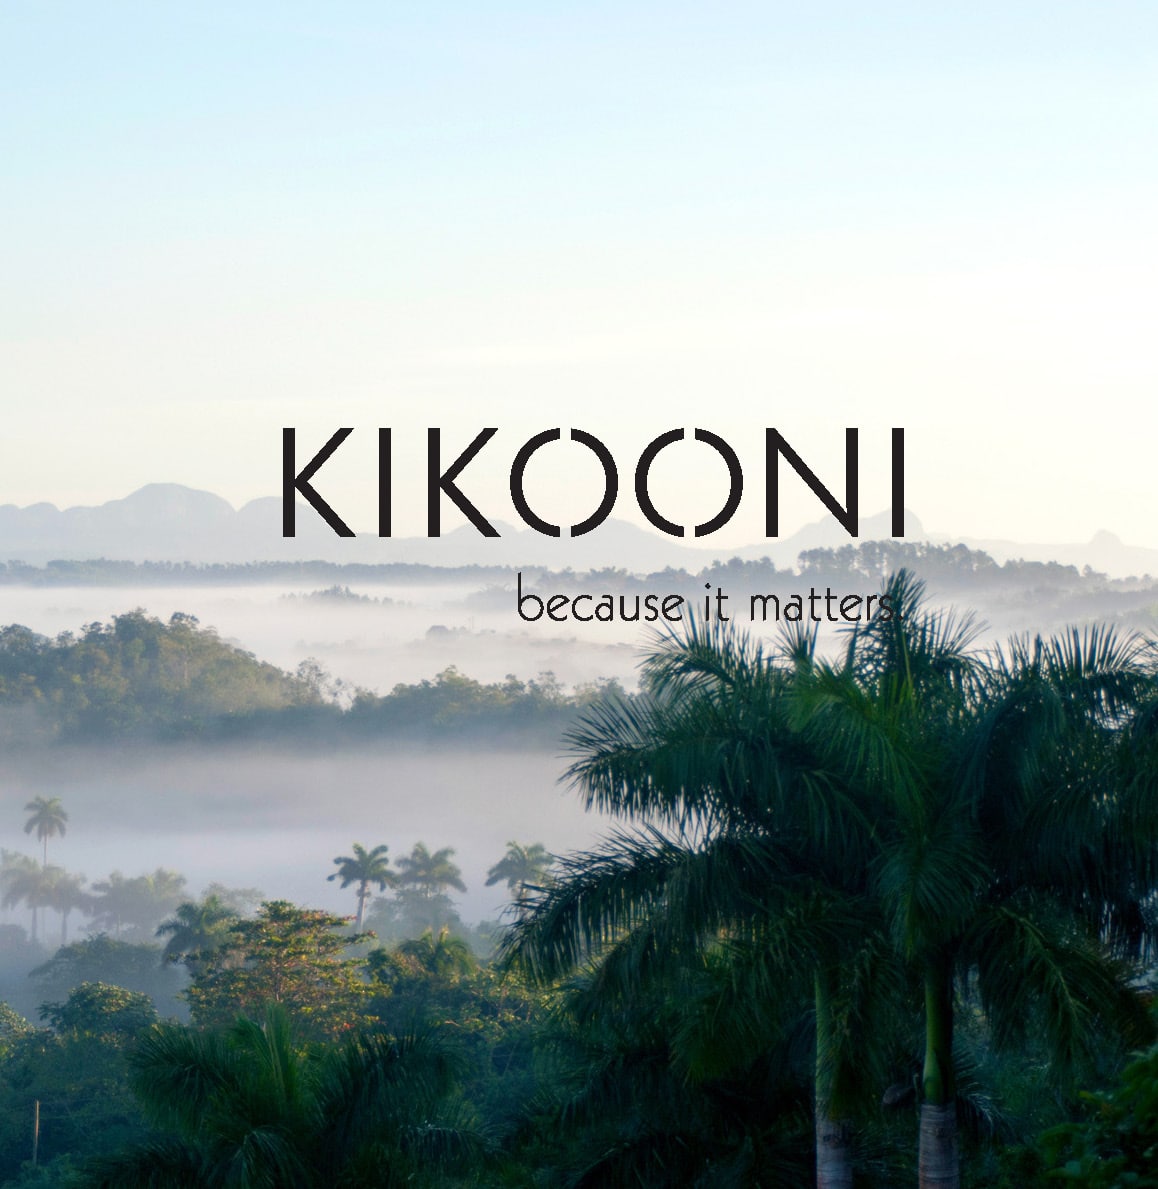 (c) Kikooni.com